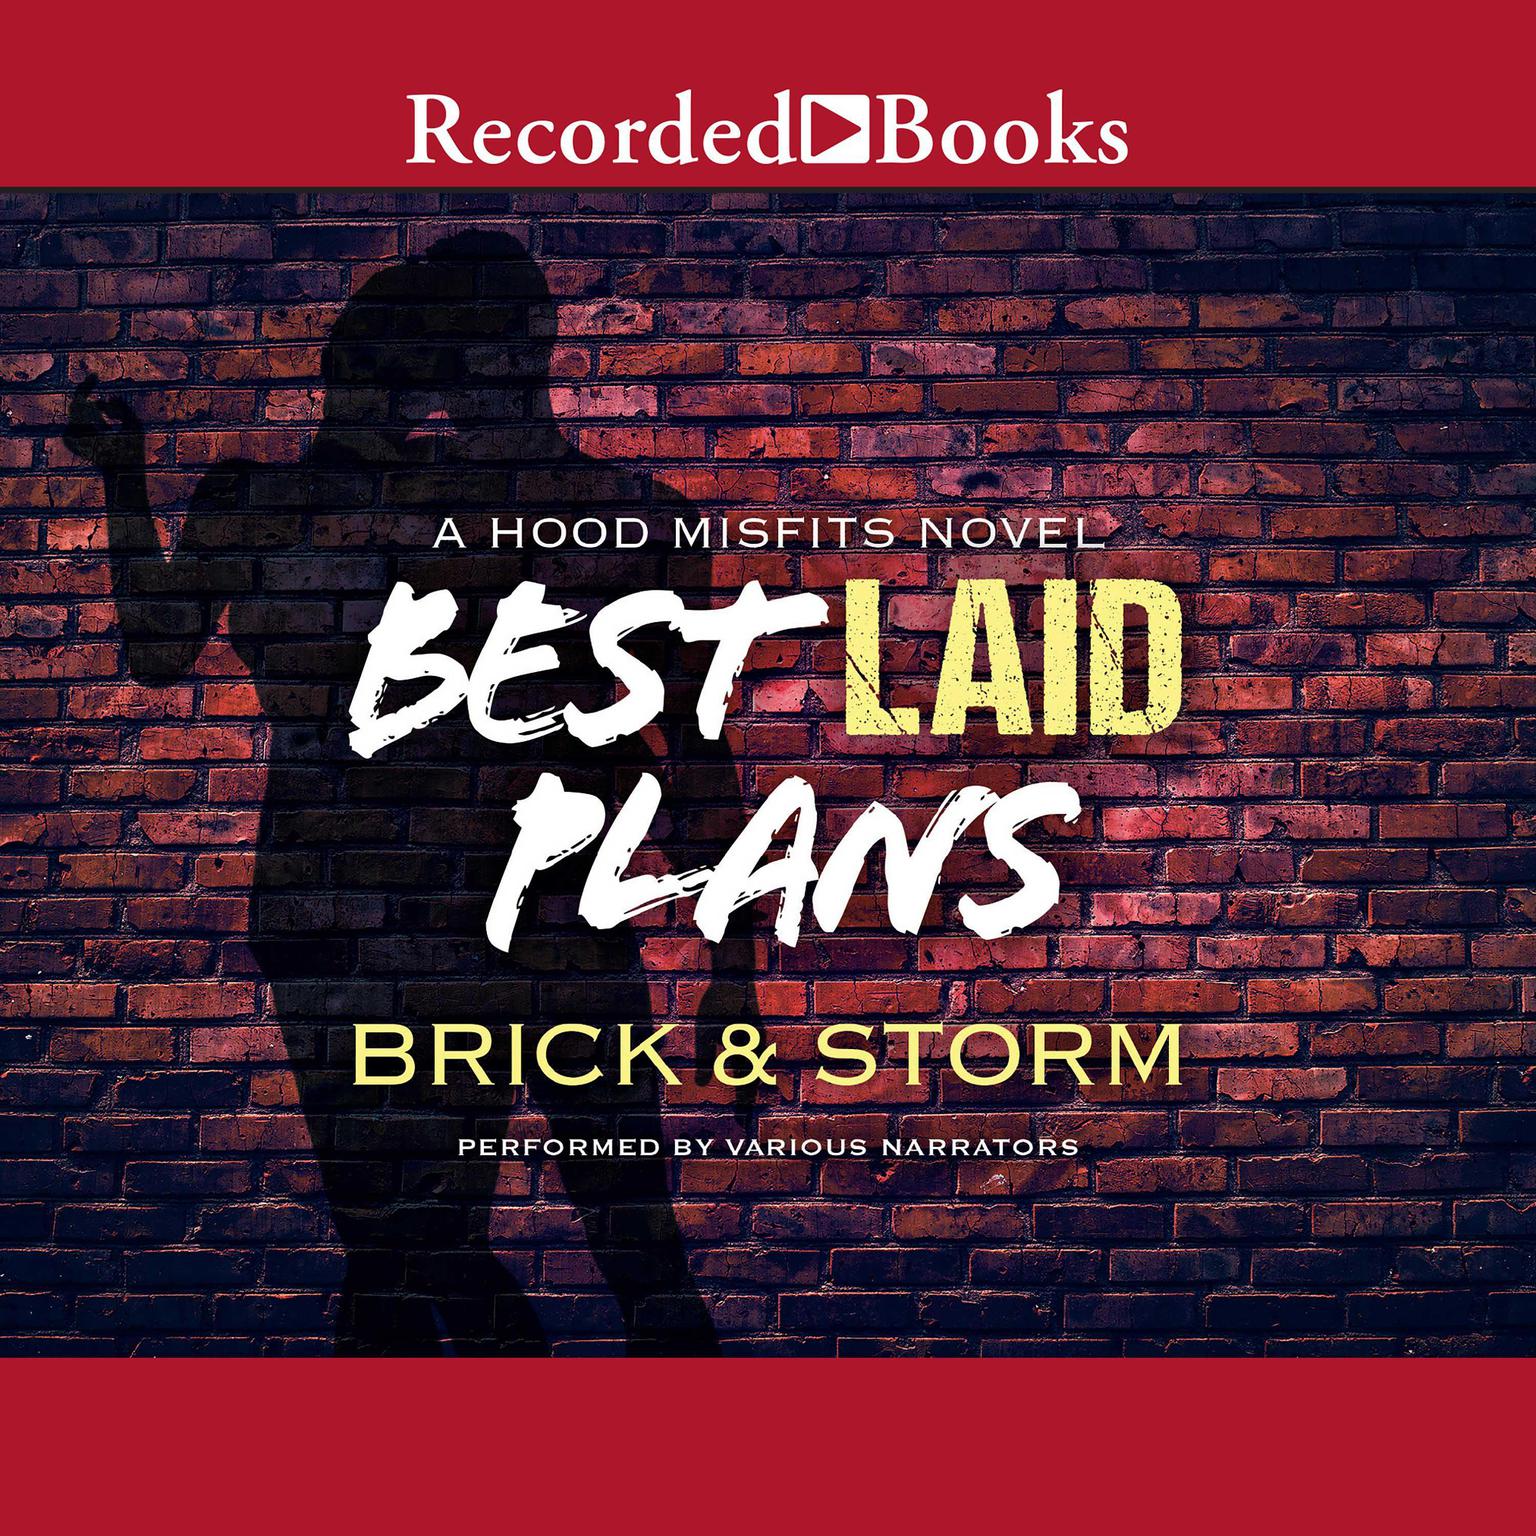 Best Laid Plans Audiobook, by Brick 